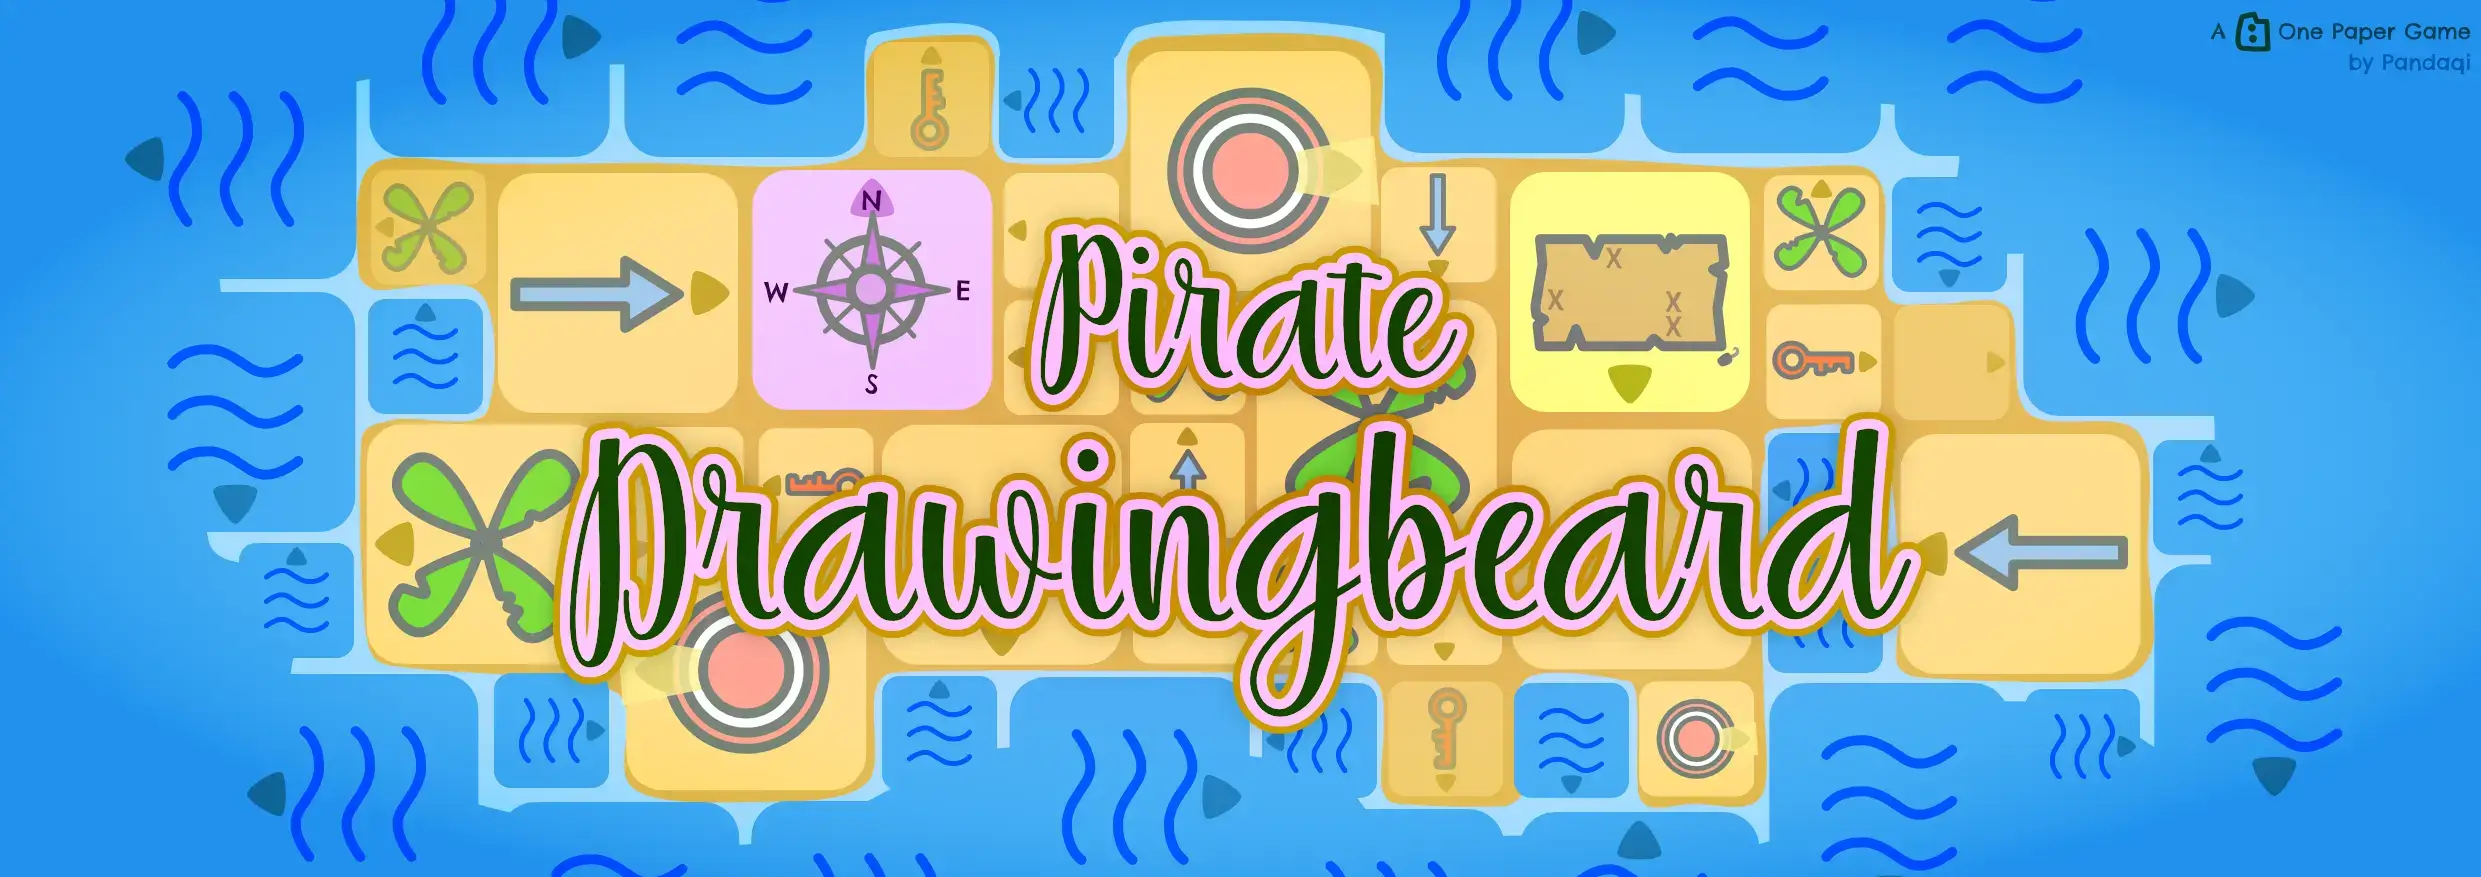 Thumbnail / Header for article: Pirate Drawingbeard